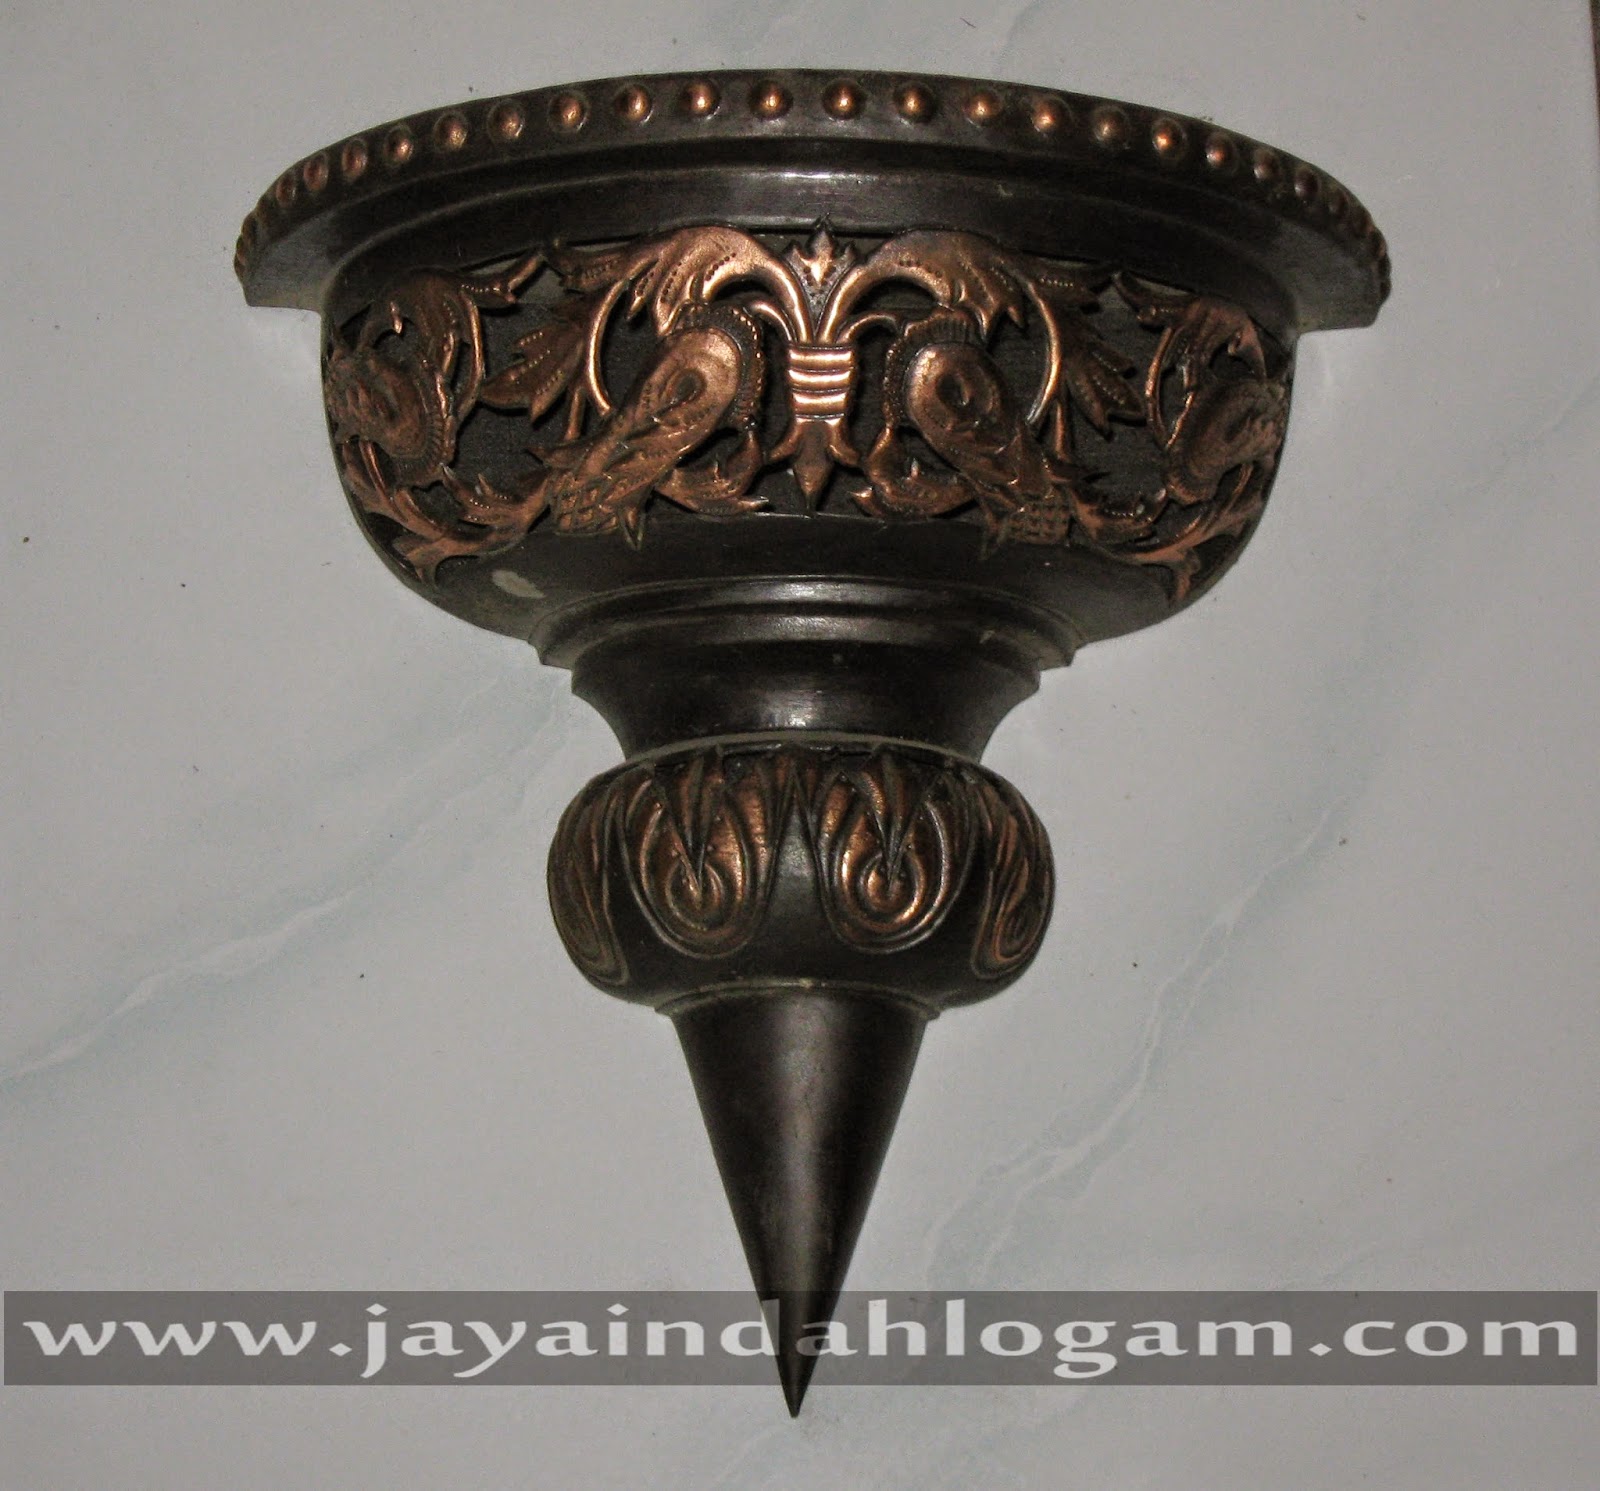 http://www.jayaindahlogam.com/2014/08/kerajinan-lampu-dinding_6.html